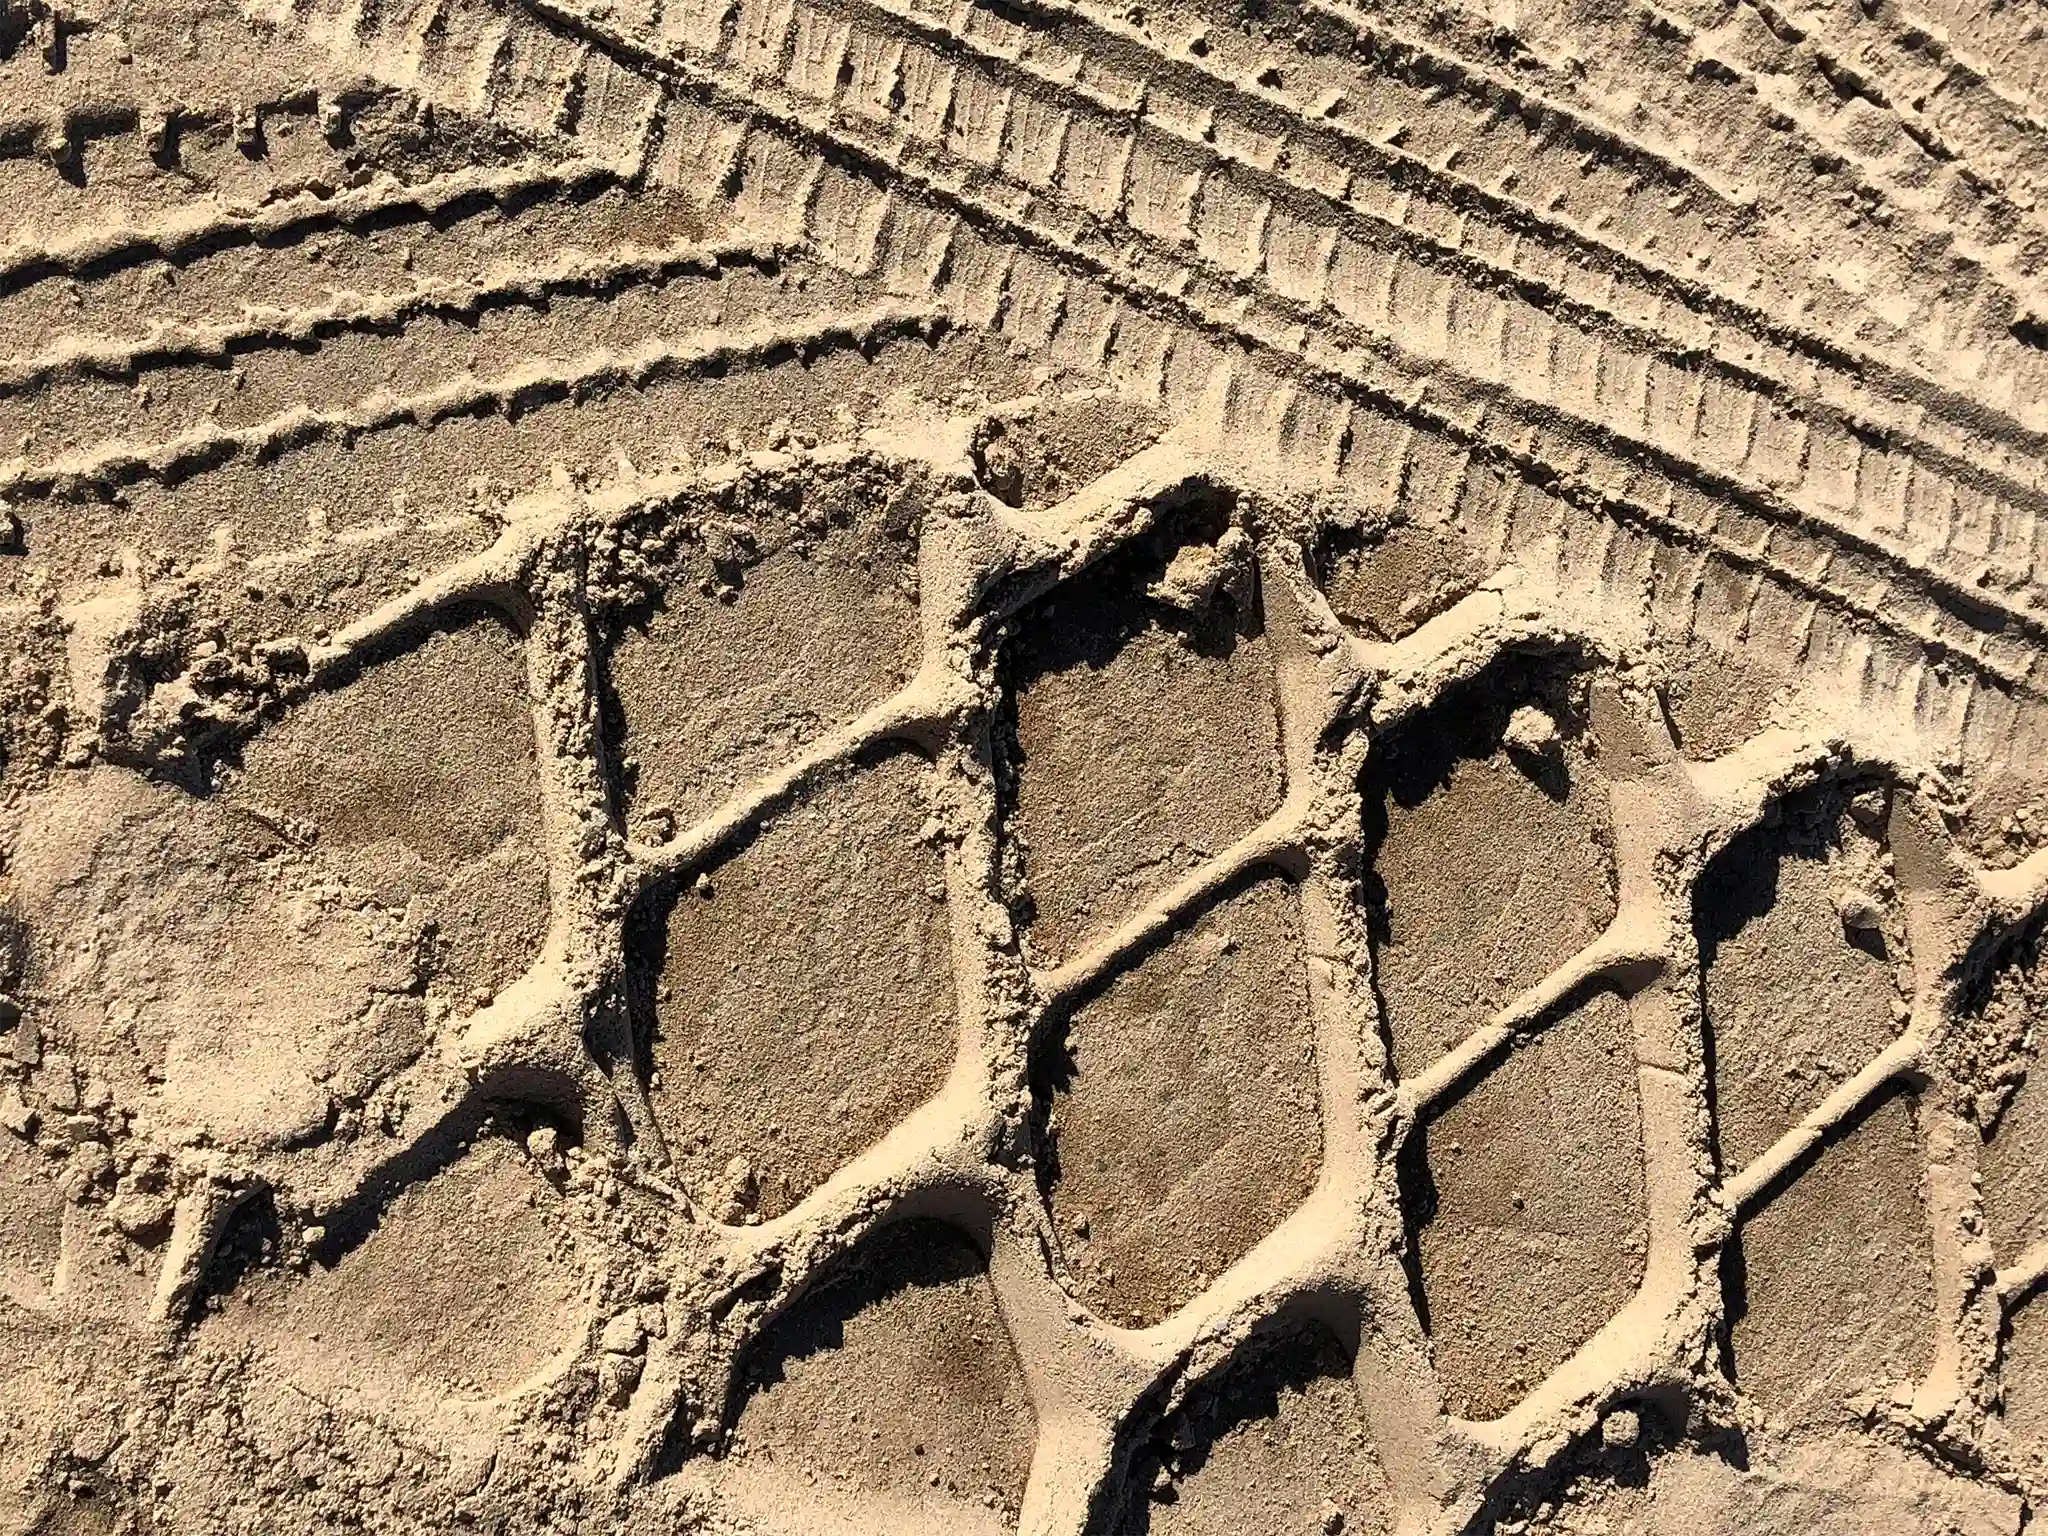 Tire tracks left in sand bytrucks and heavy equipment.